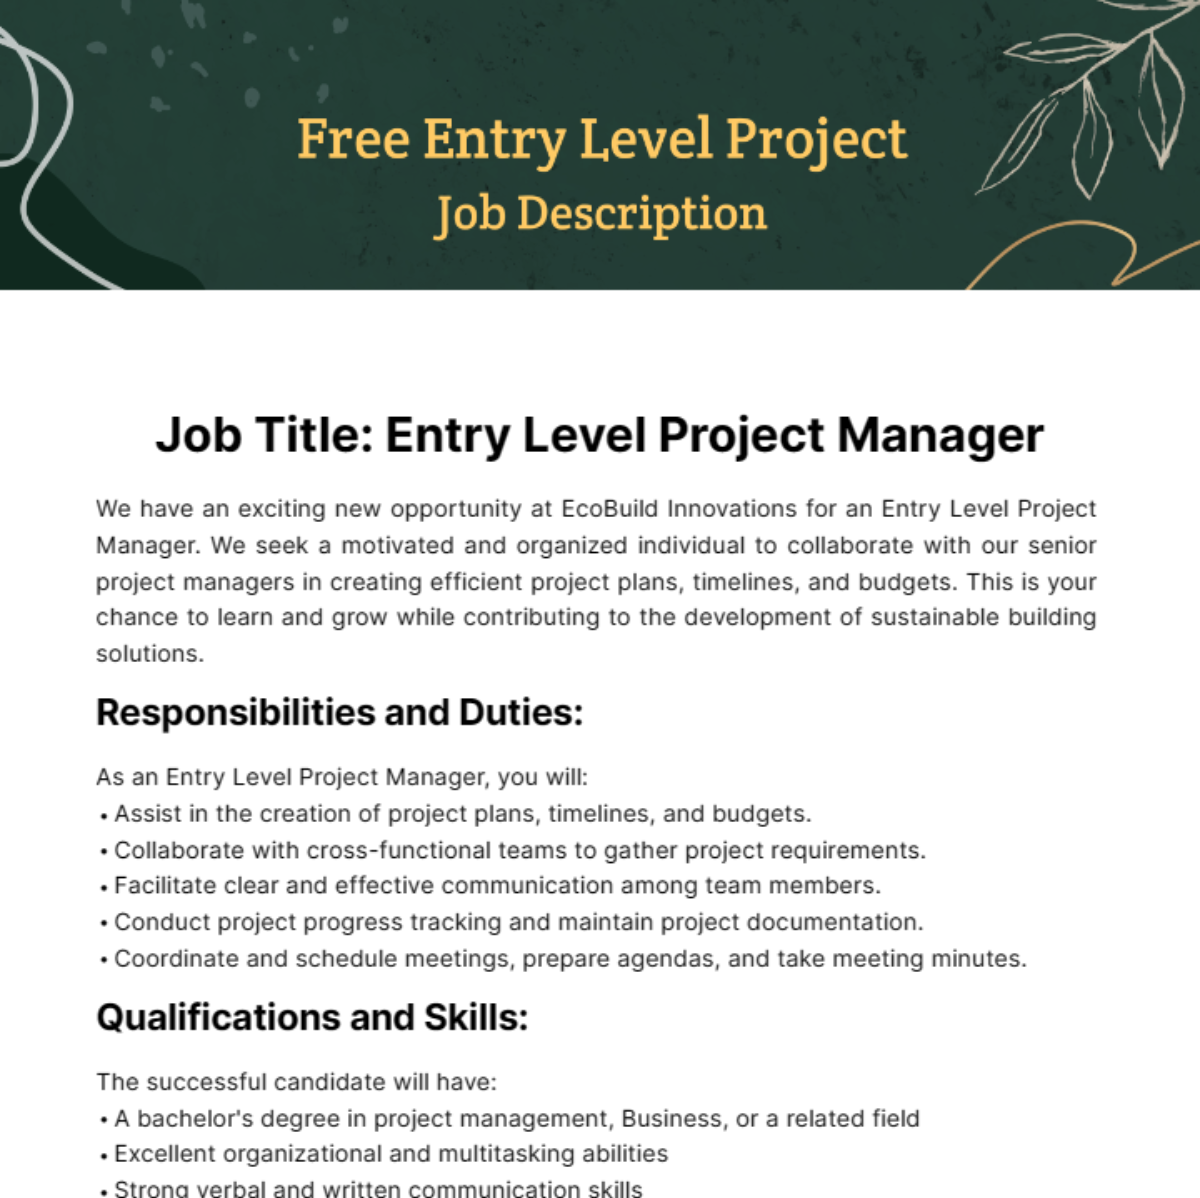 Free Entry Level Project Job Description Template